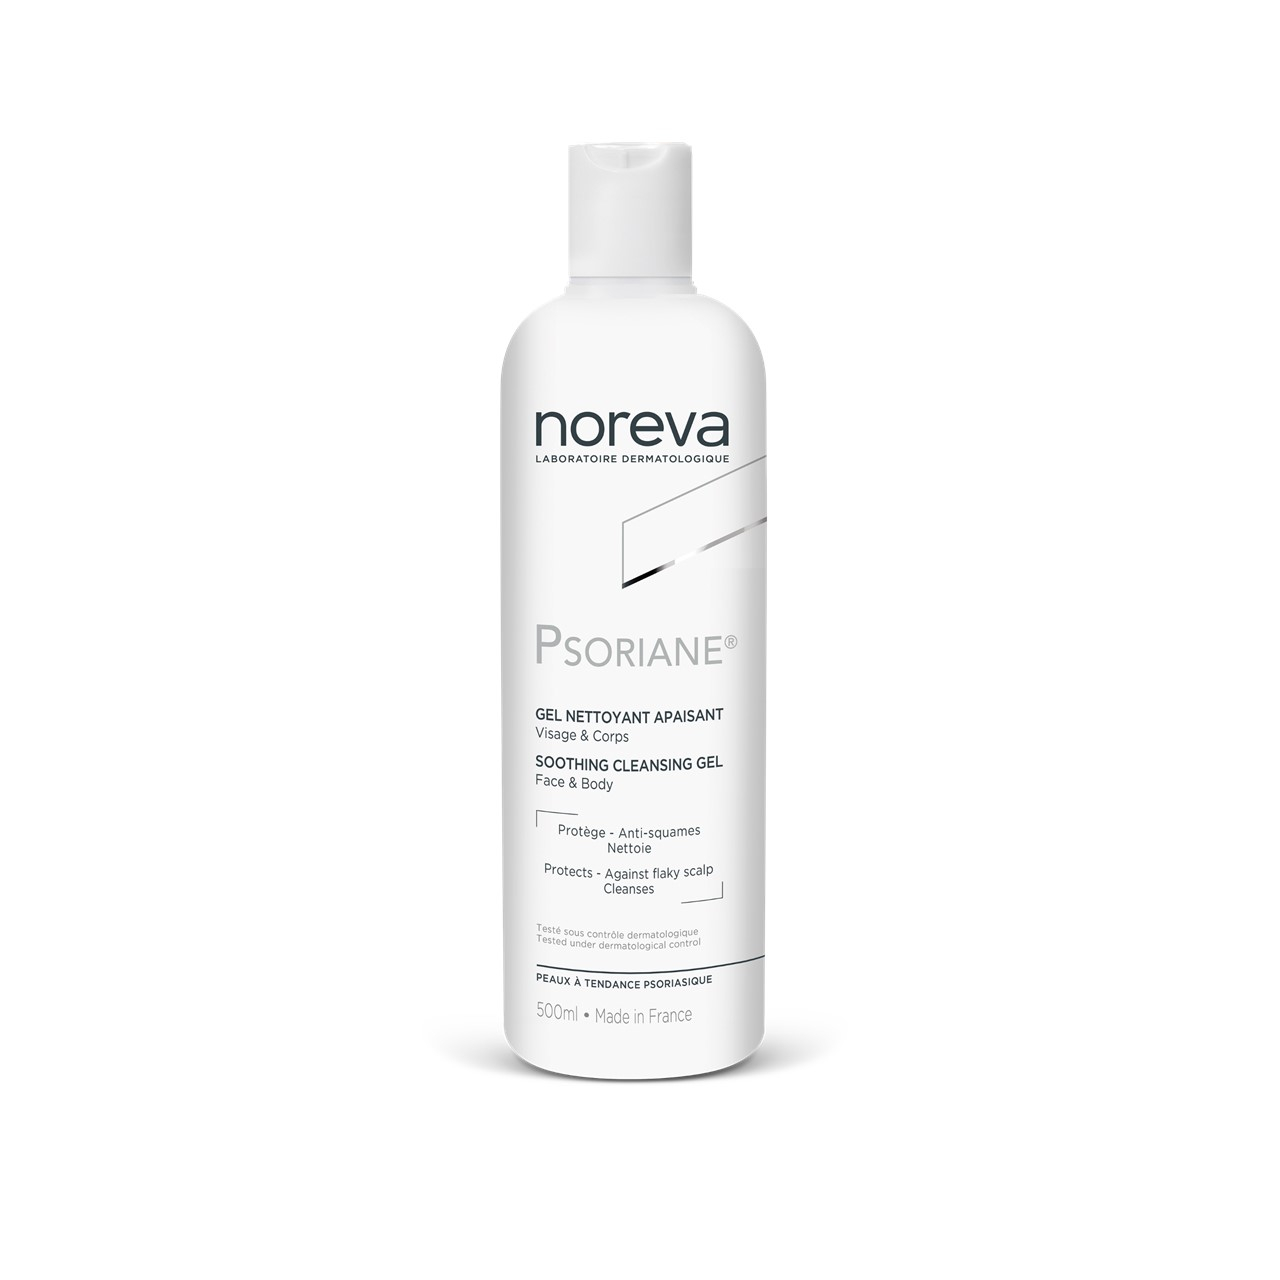 Noreva Psoriane Soothing Cleansing Gel 500ml (16.91fl oz)